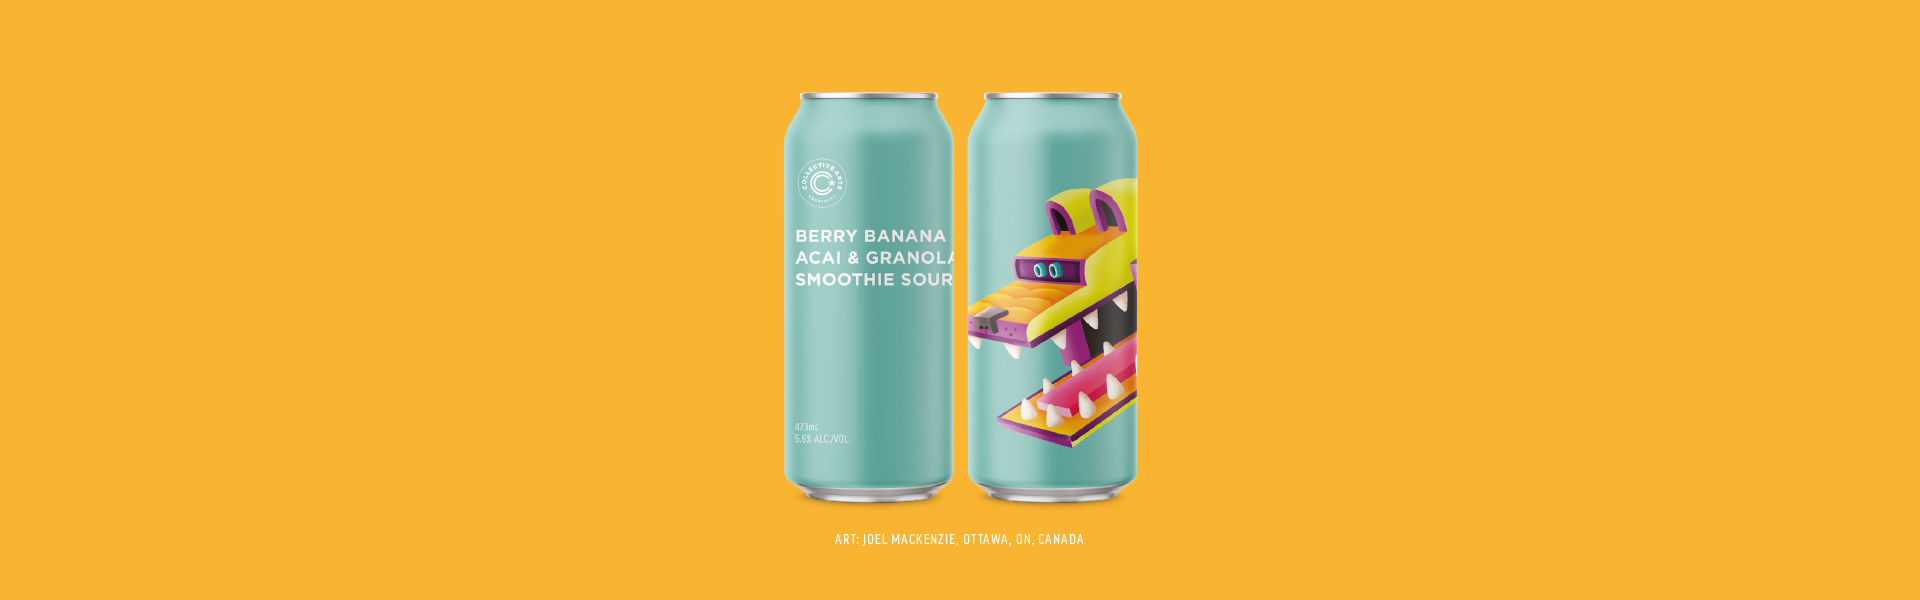 Berry Banana Acai & Granola Smoothie Sour – Collective Arts släpper syrlig smakbomb.